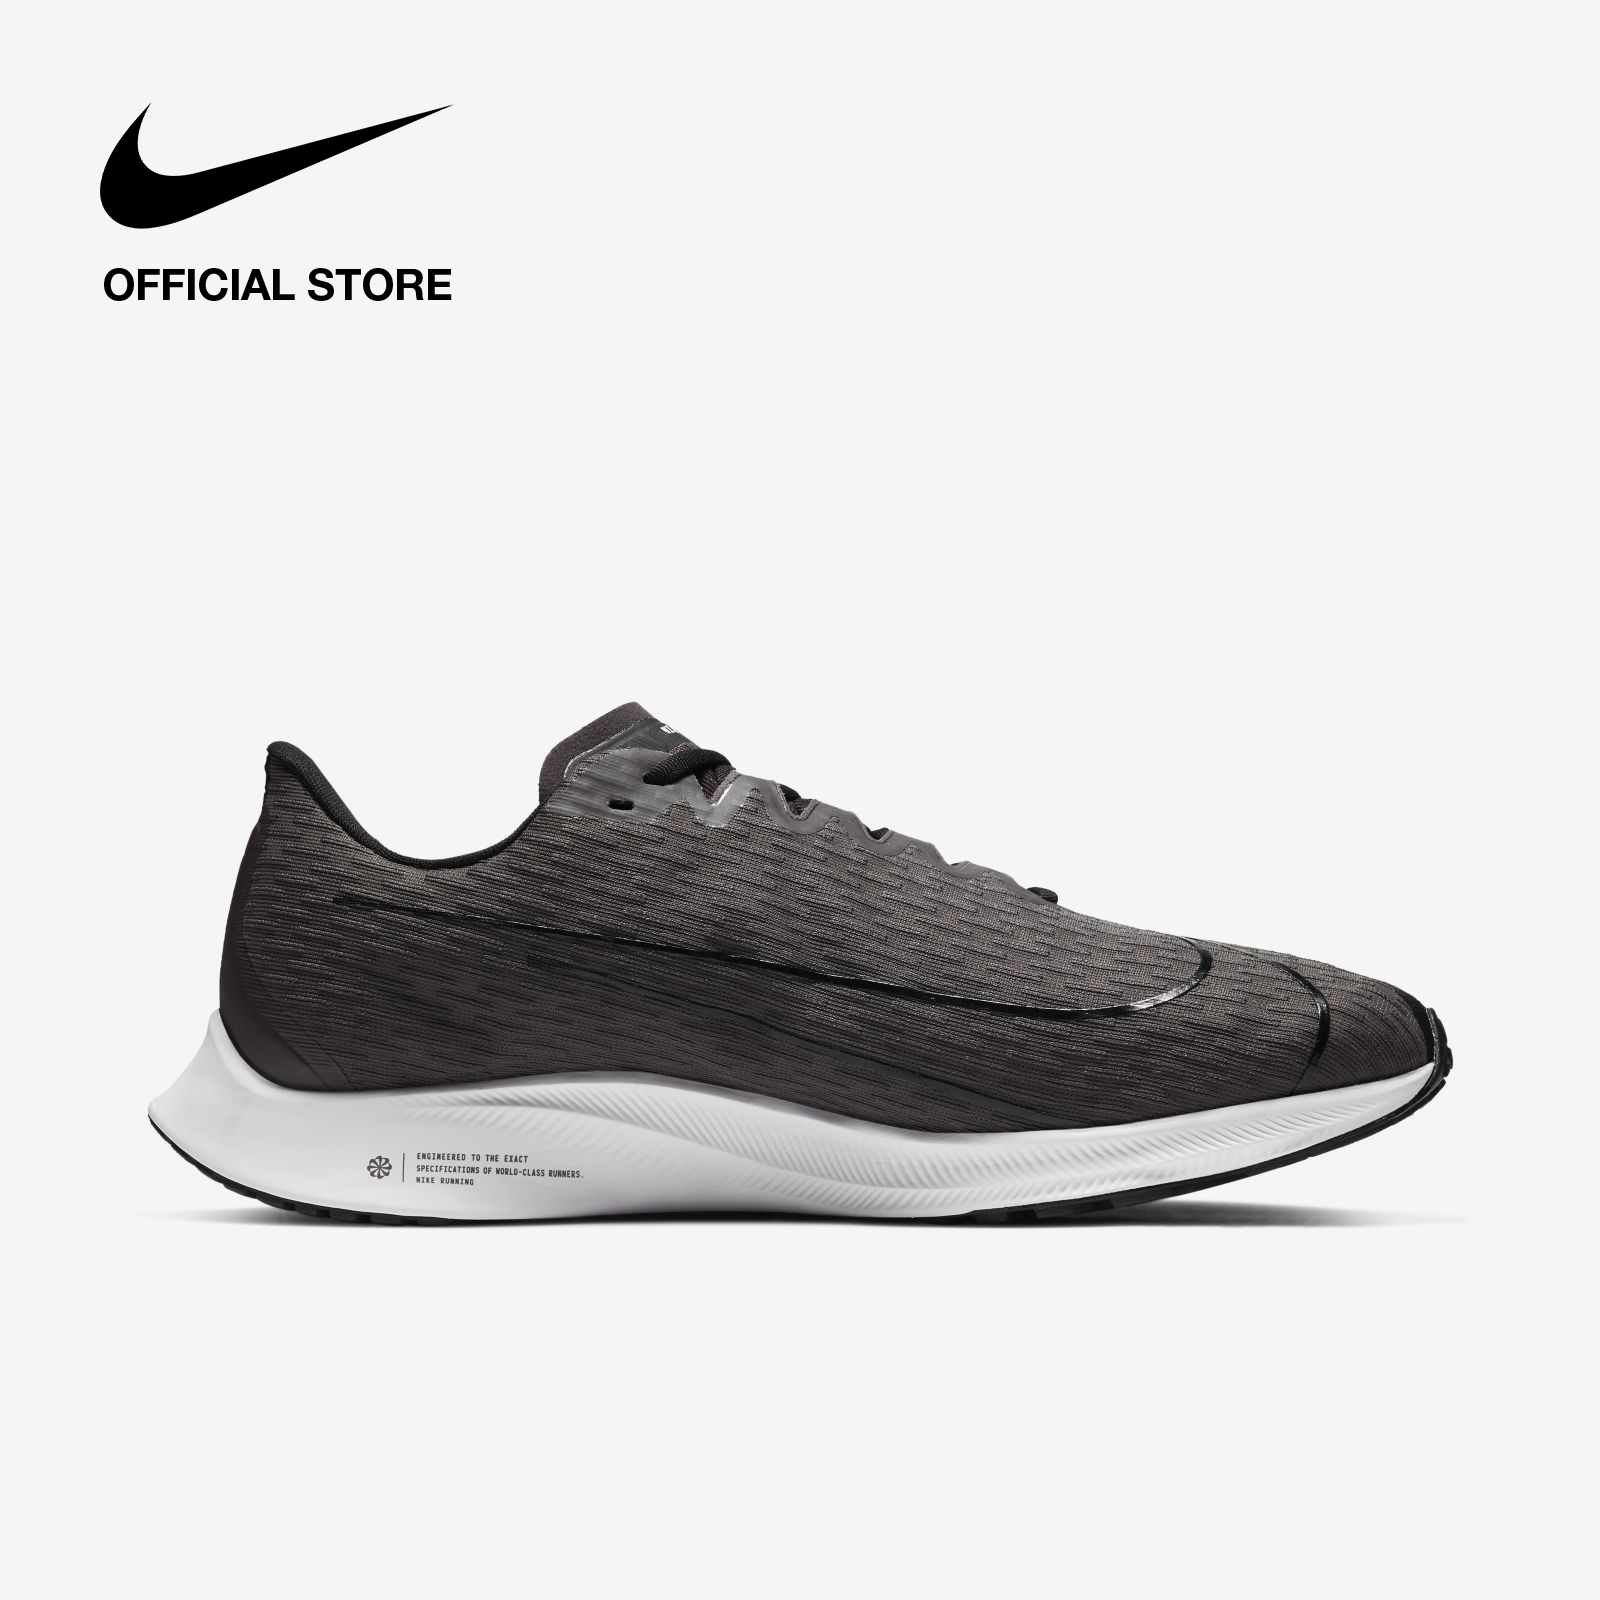 Nike Men's Zoom Rival Fly 2 Shoes - Black รองเท้าผู้ชาย Nike Zoom Rival Fly 2 - สีดำ